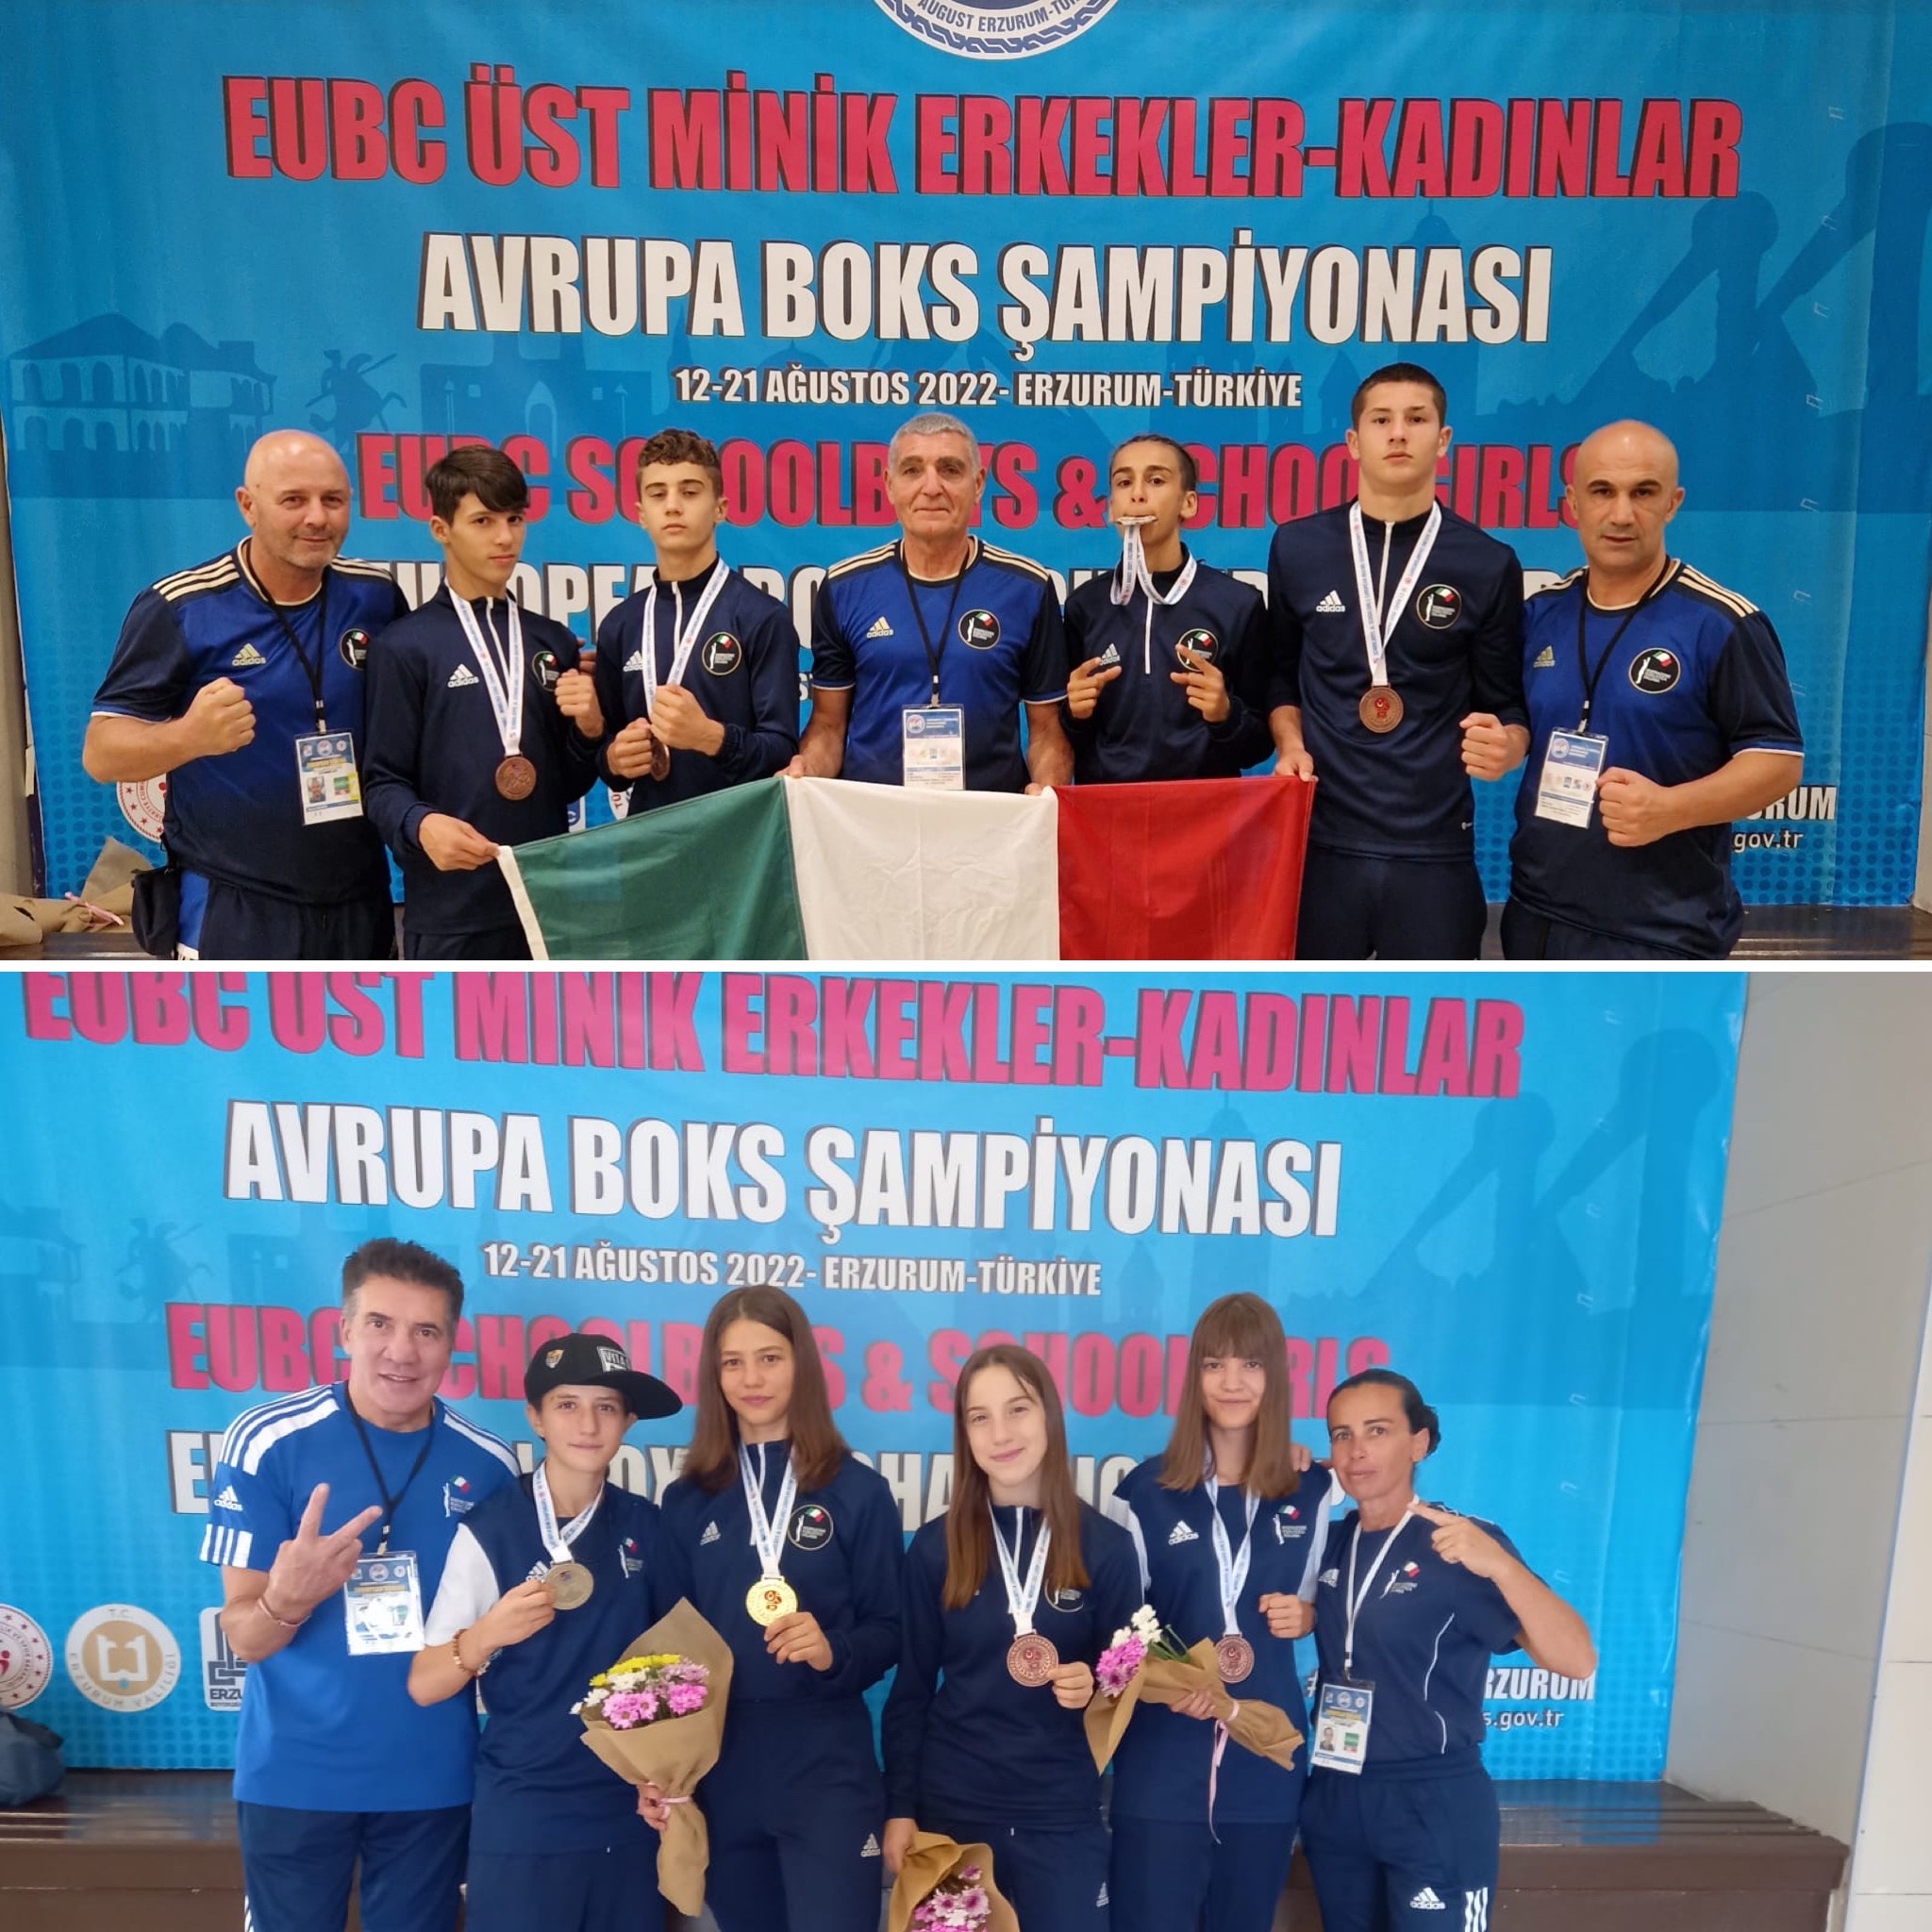 EuroSchoolBoy/Girl Erzurum 2022 - 1 Oro, 2 Argenti e 5 Bronzi per l'Italia Boxing Team 